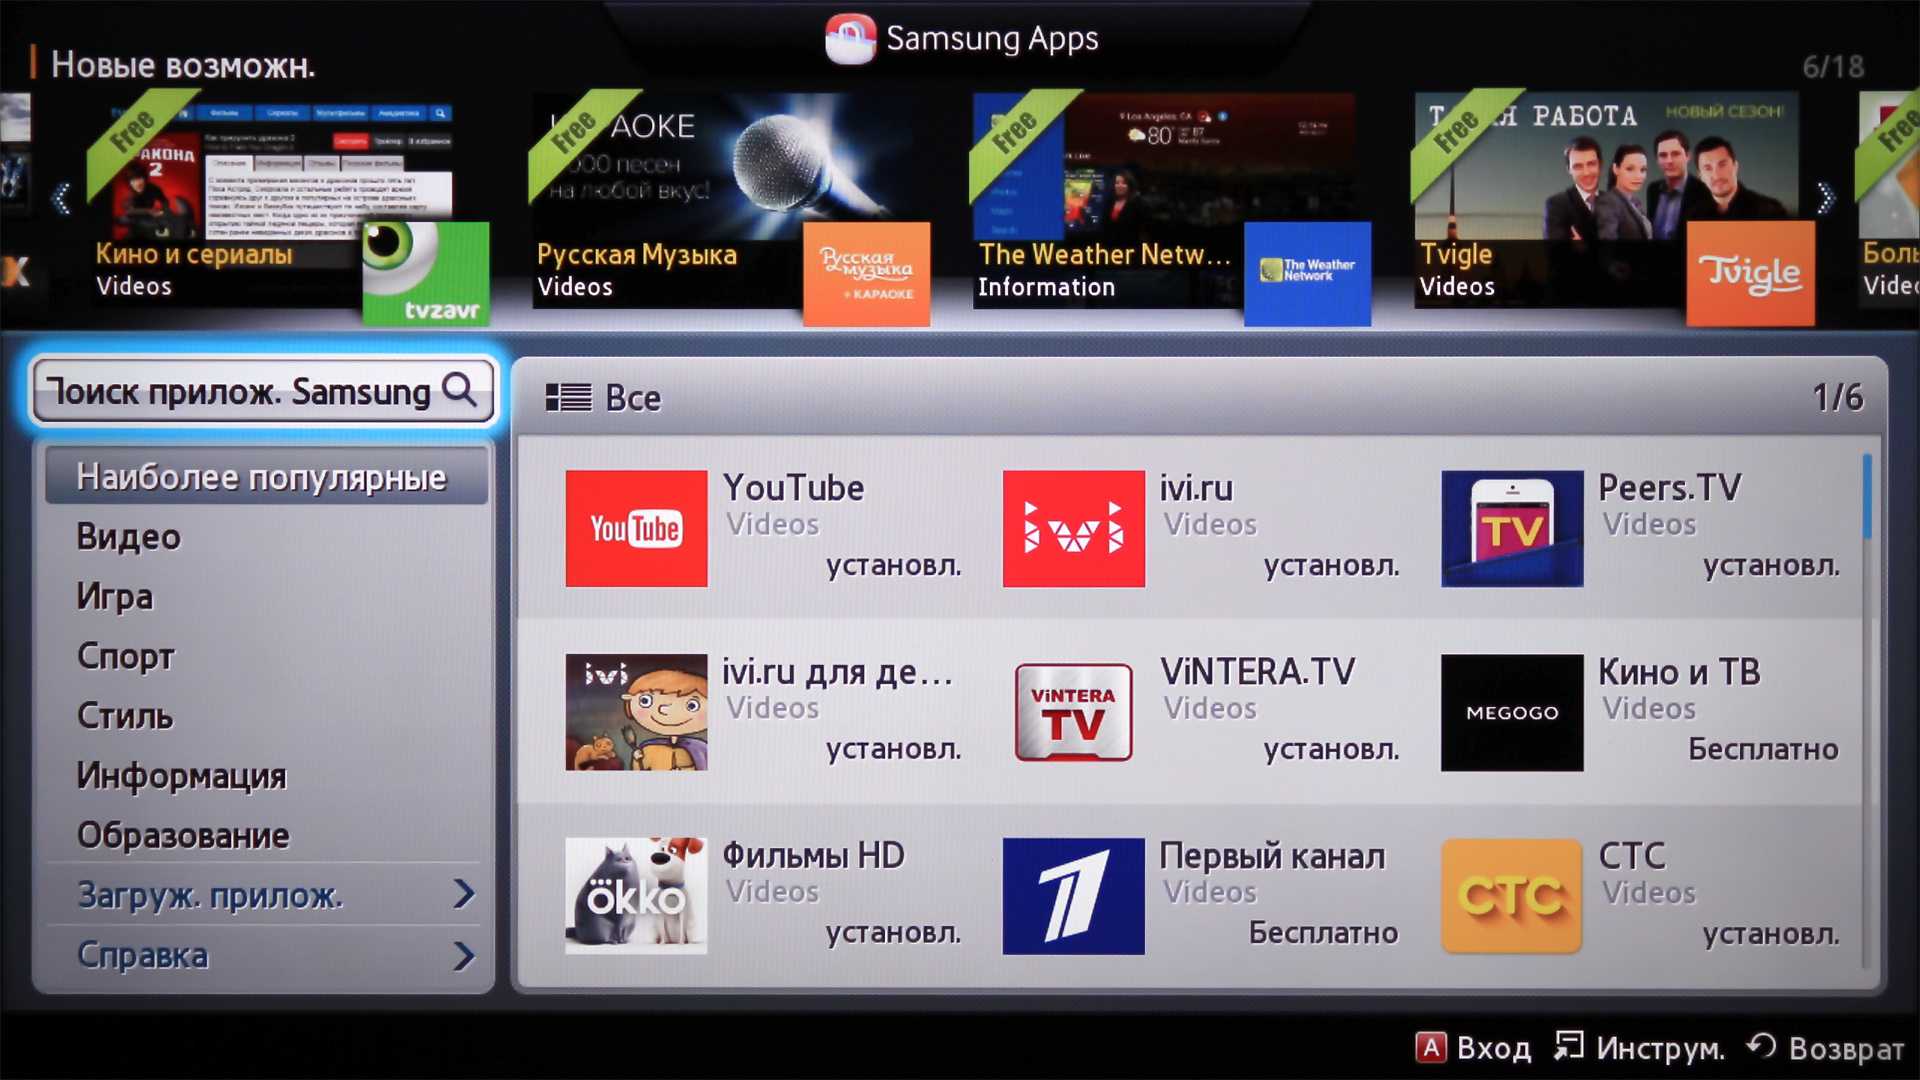 Часы на телевизор самсунг. Samsung Smart TV (Orsay). Samsung Orsay 2014 телевизор. Samsung apps для Smart TV. Samsung Smart TV 2014.